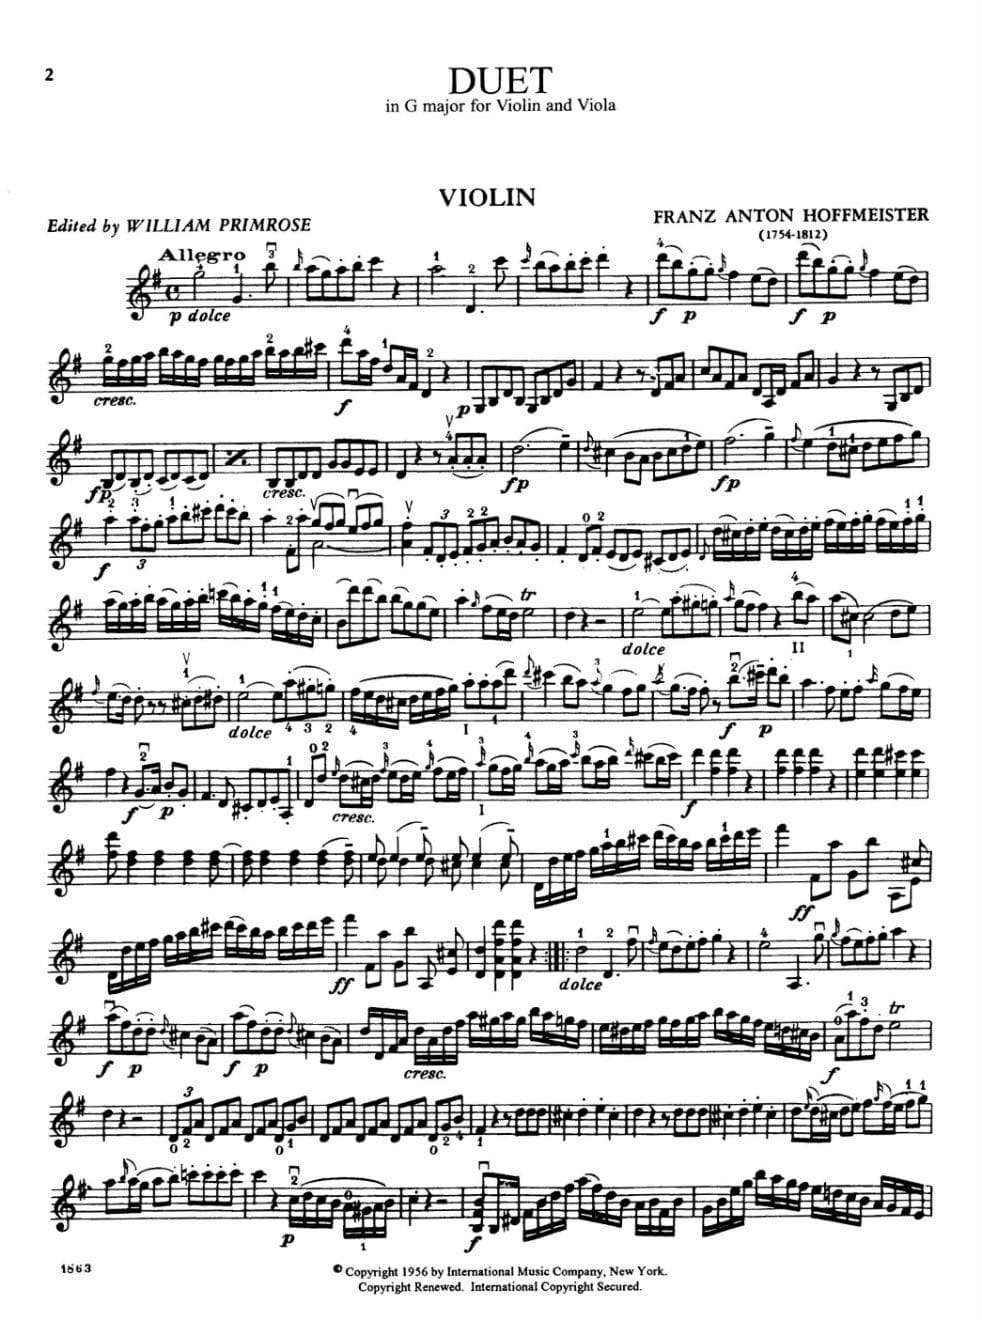 Hoffmeister, Franz Anton - Duet in G Major - Violin and Viola - edited by William Primrose - International Edition